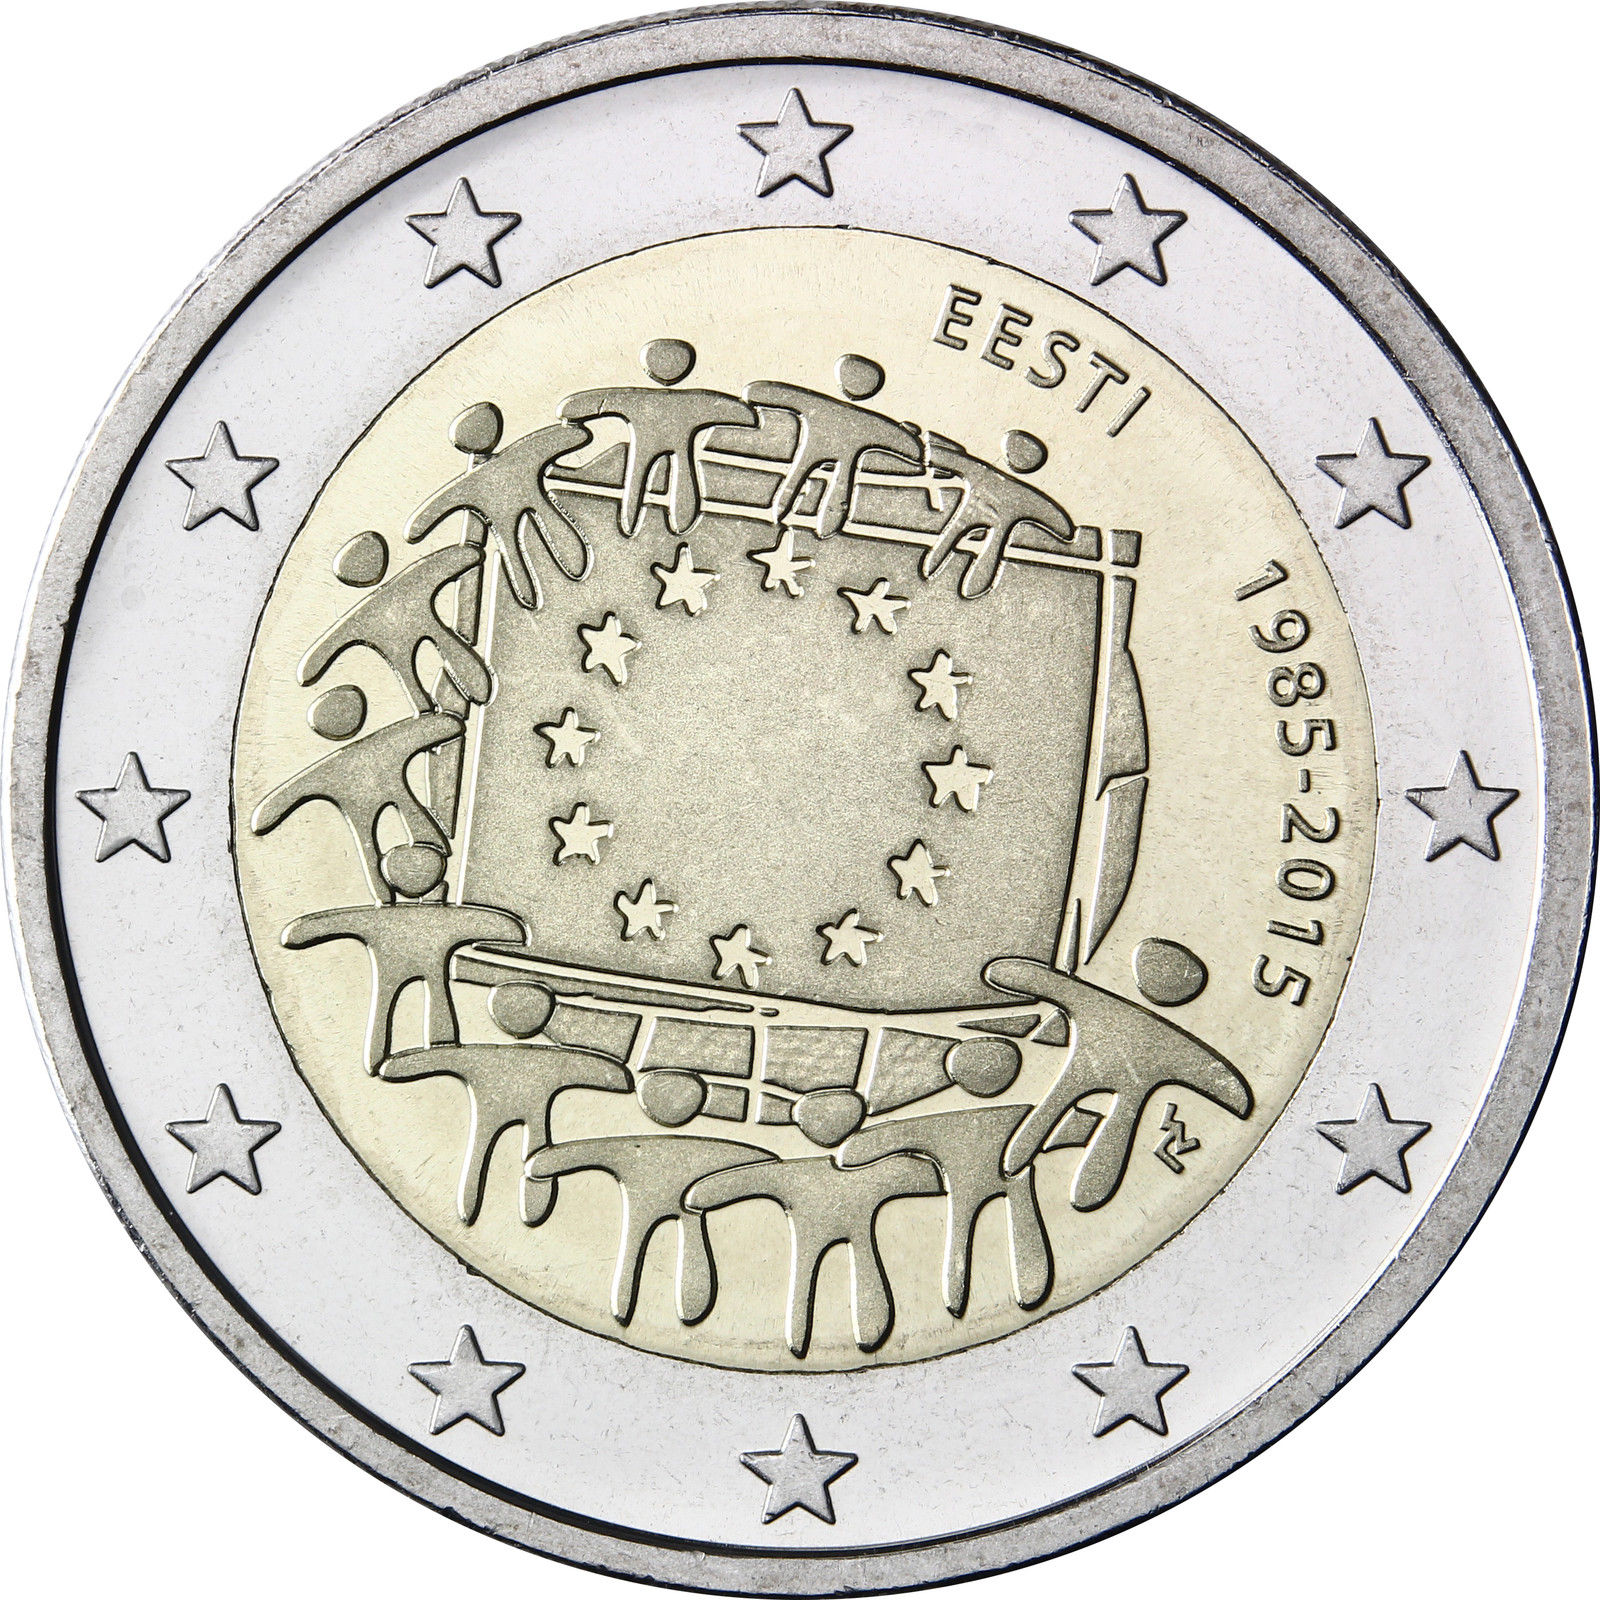 Estonia 2 euro 2015 - 30th anniversary of the EU flag [eur30436]